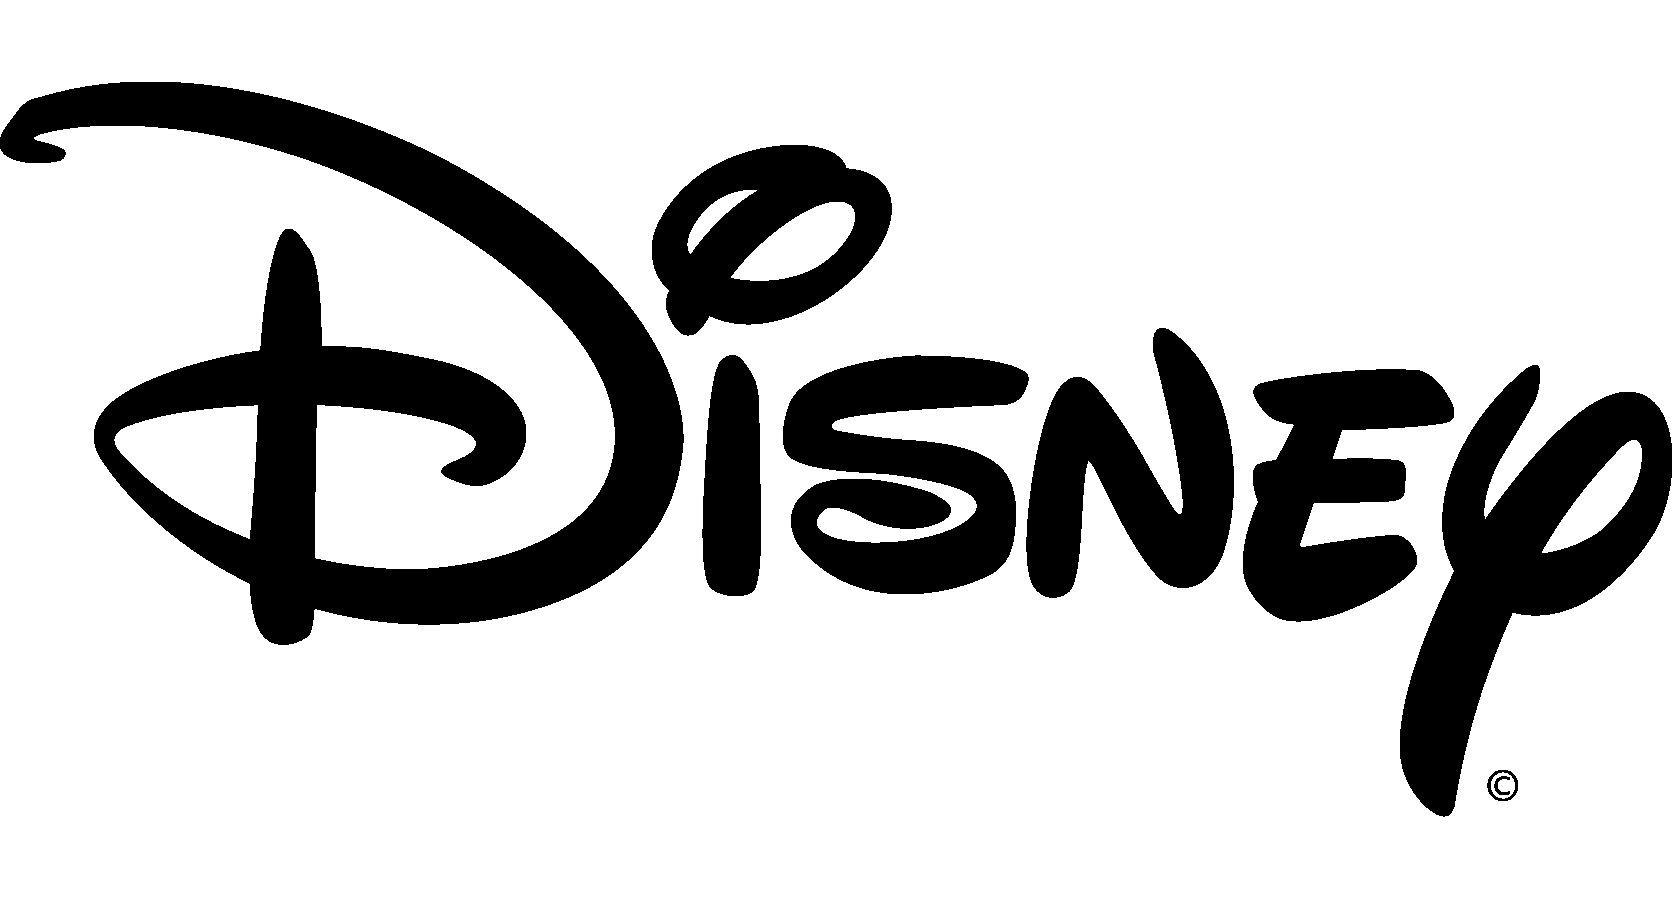 Disnney Logo - Walt Disney logo PNG images free download